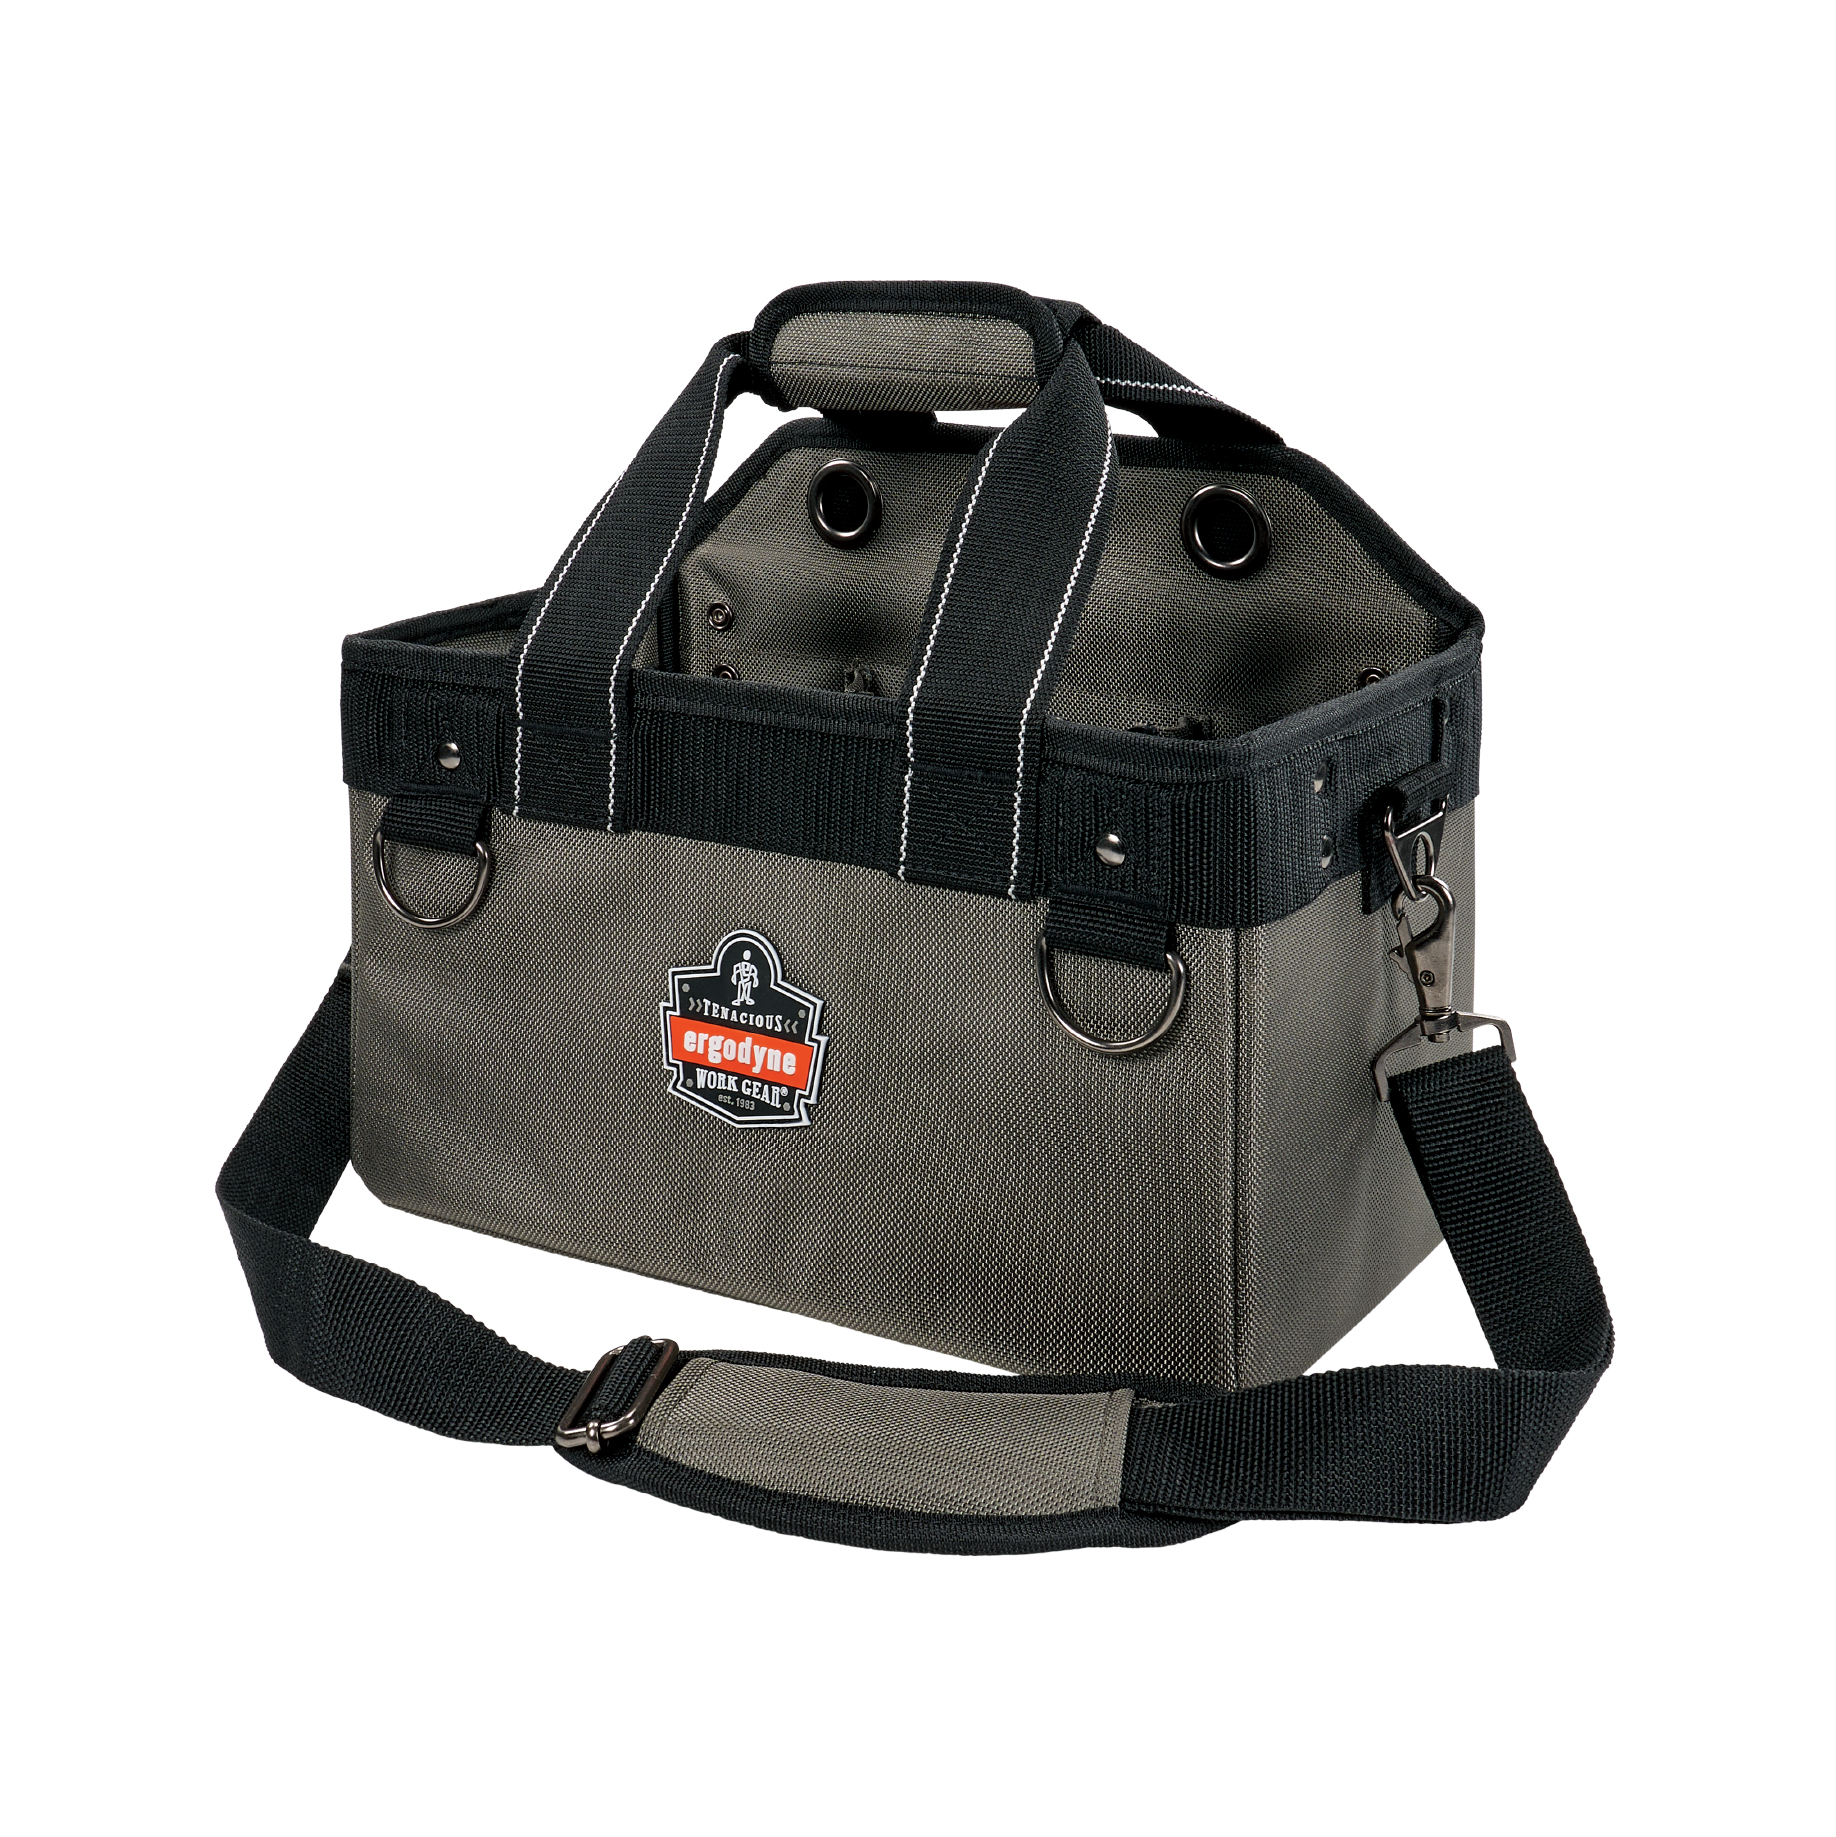 Bucket Tool Bag with 17 Pockets Soft Sided Drawstring - ezpatio2u